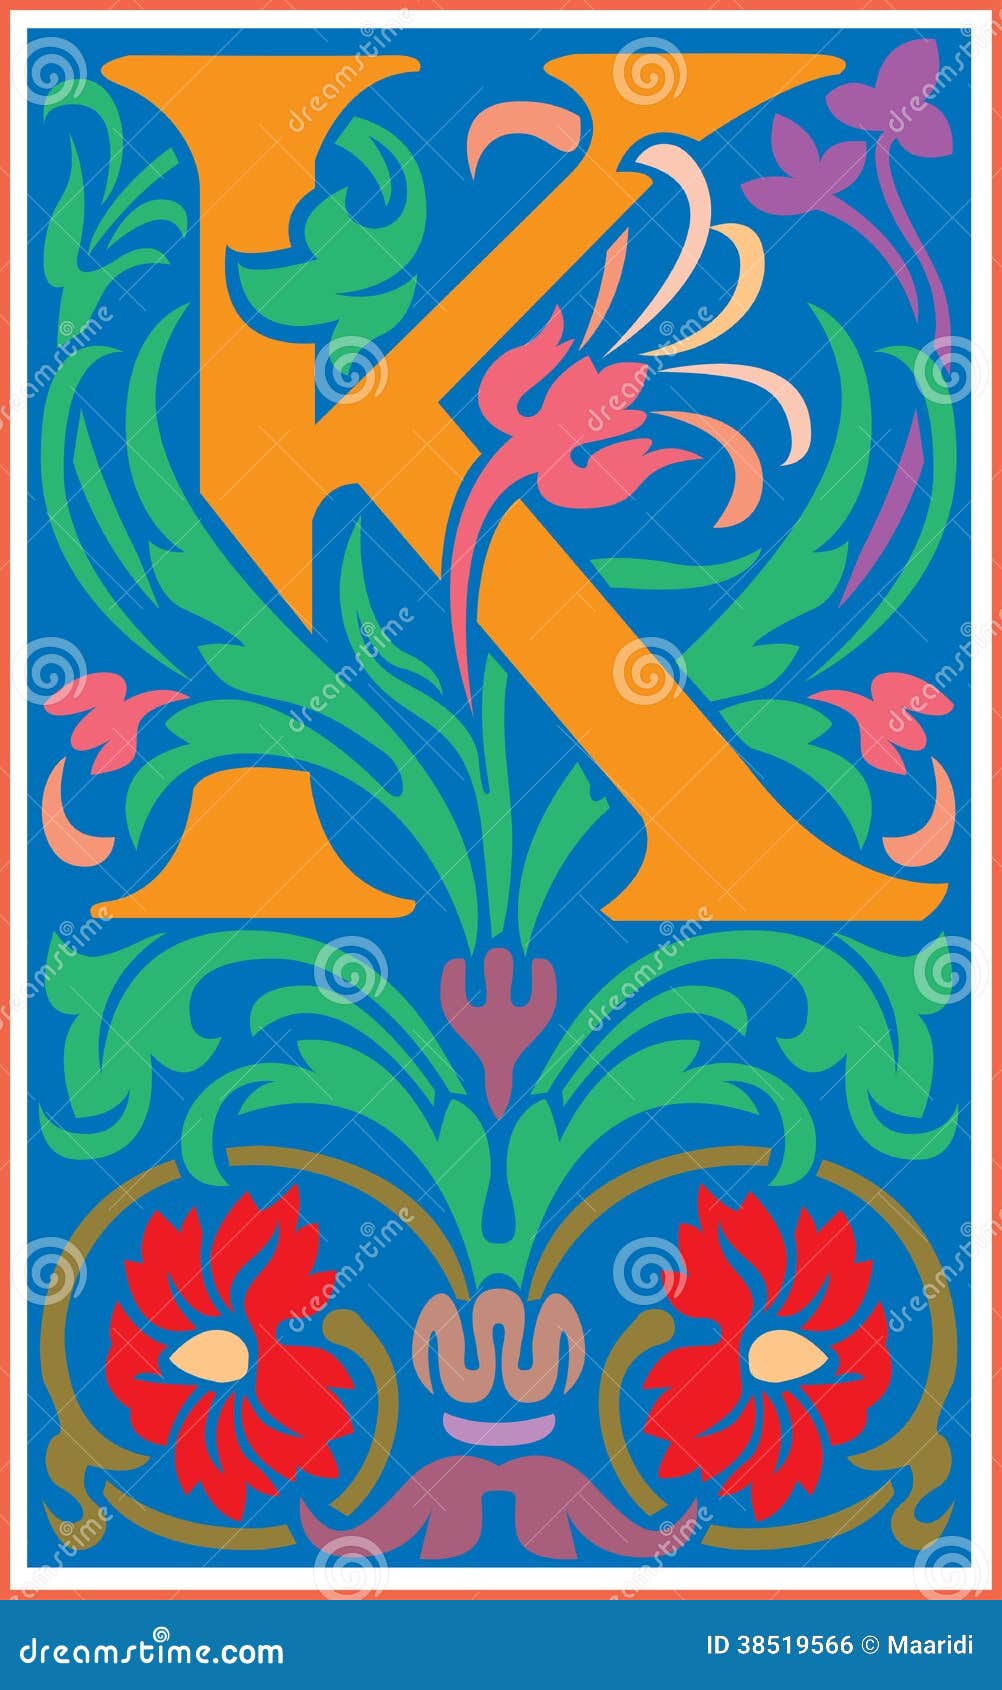 Download Flowers Decorative Letter K In Color Stock Vector - Illustration of design, flowers: 38519566